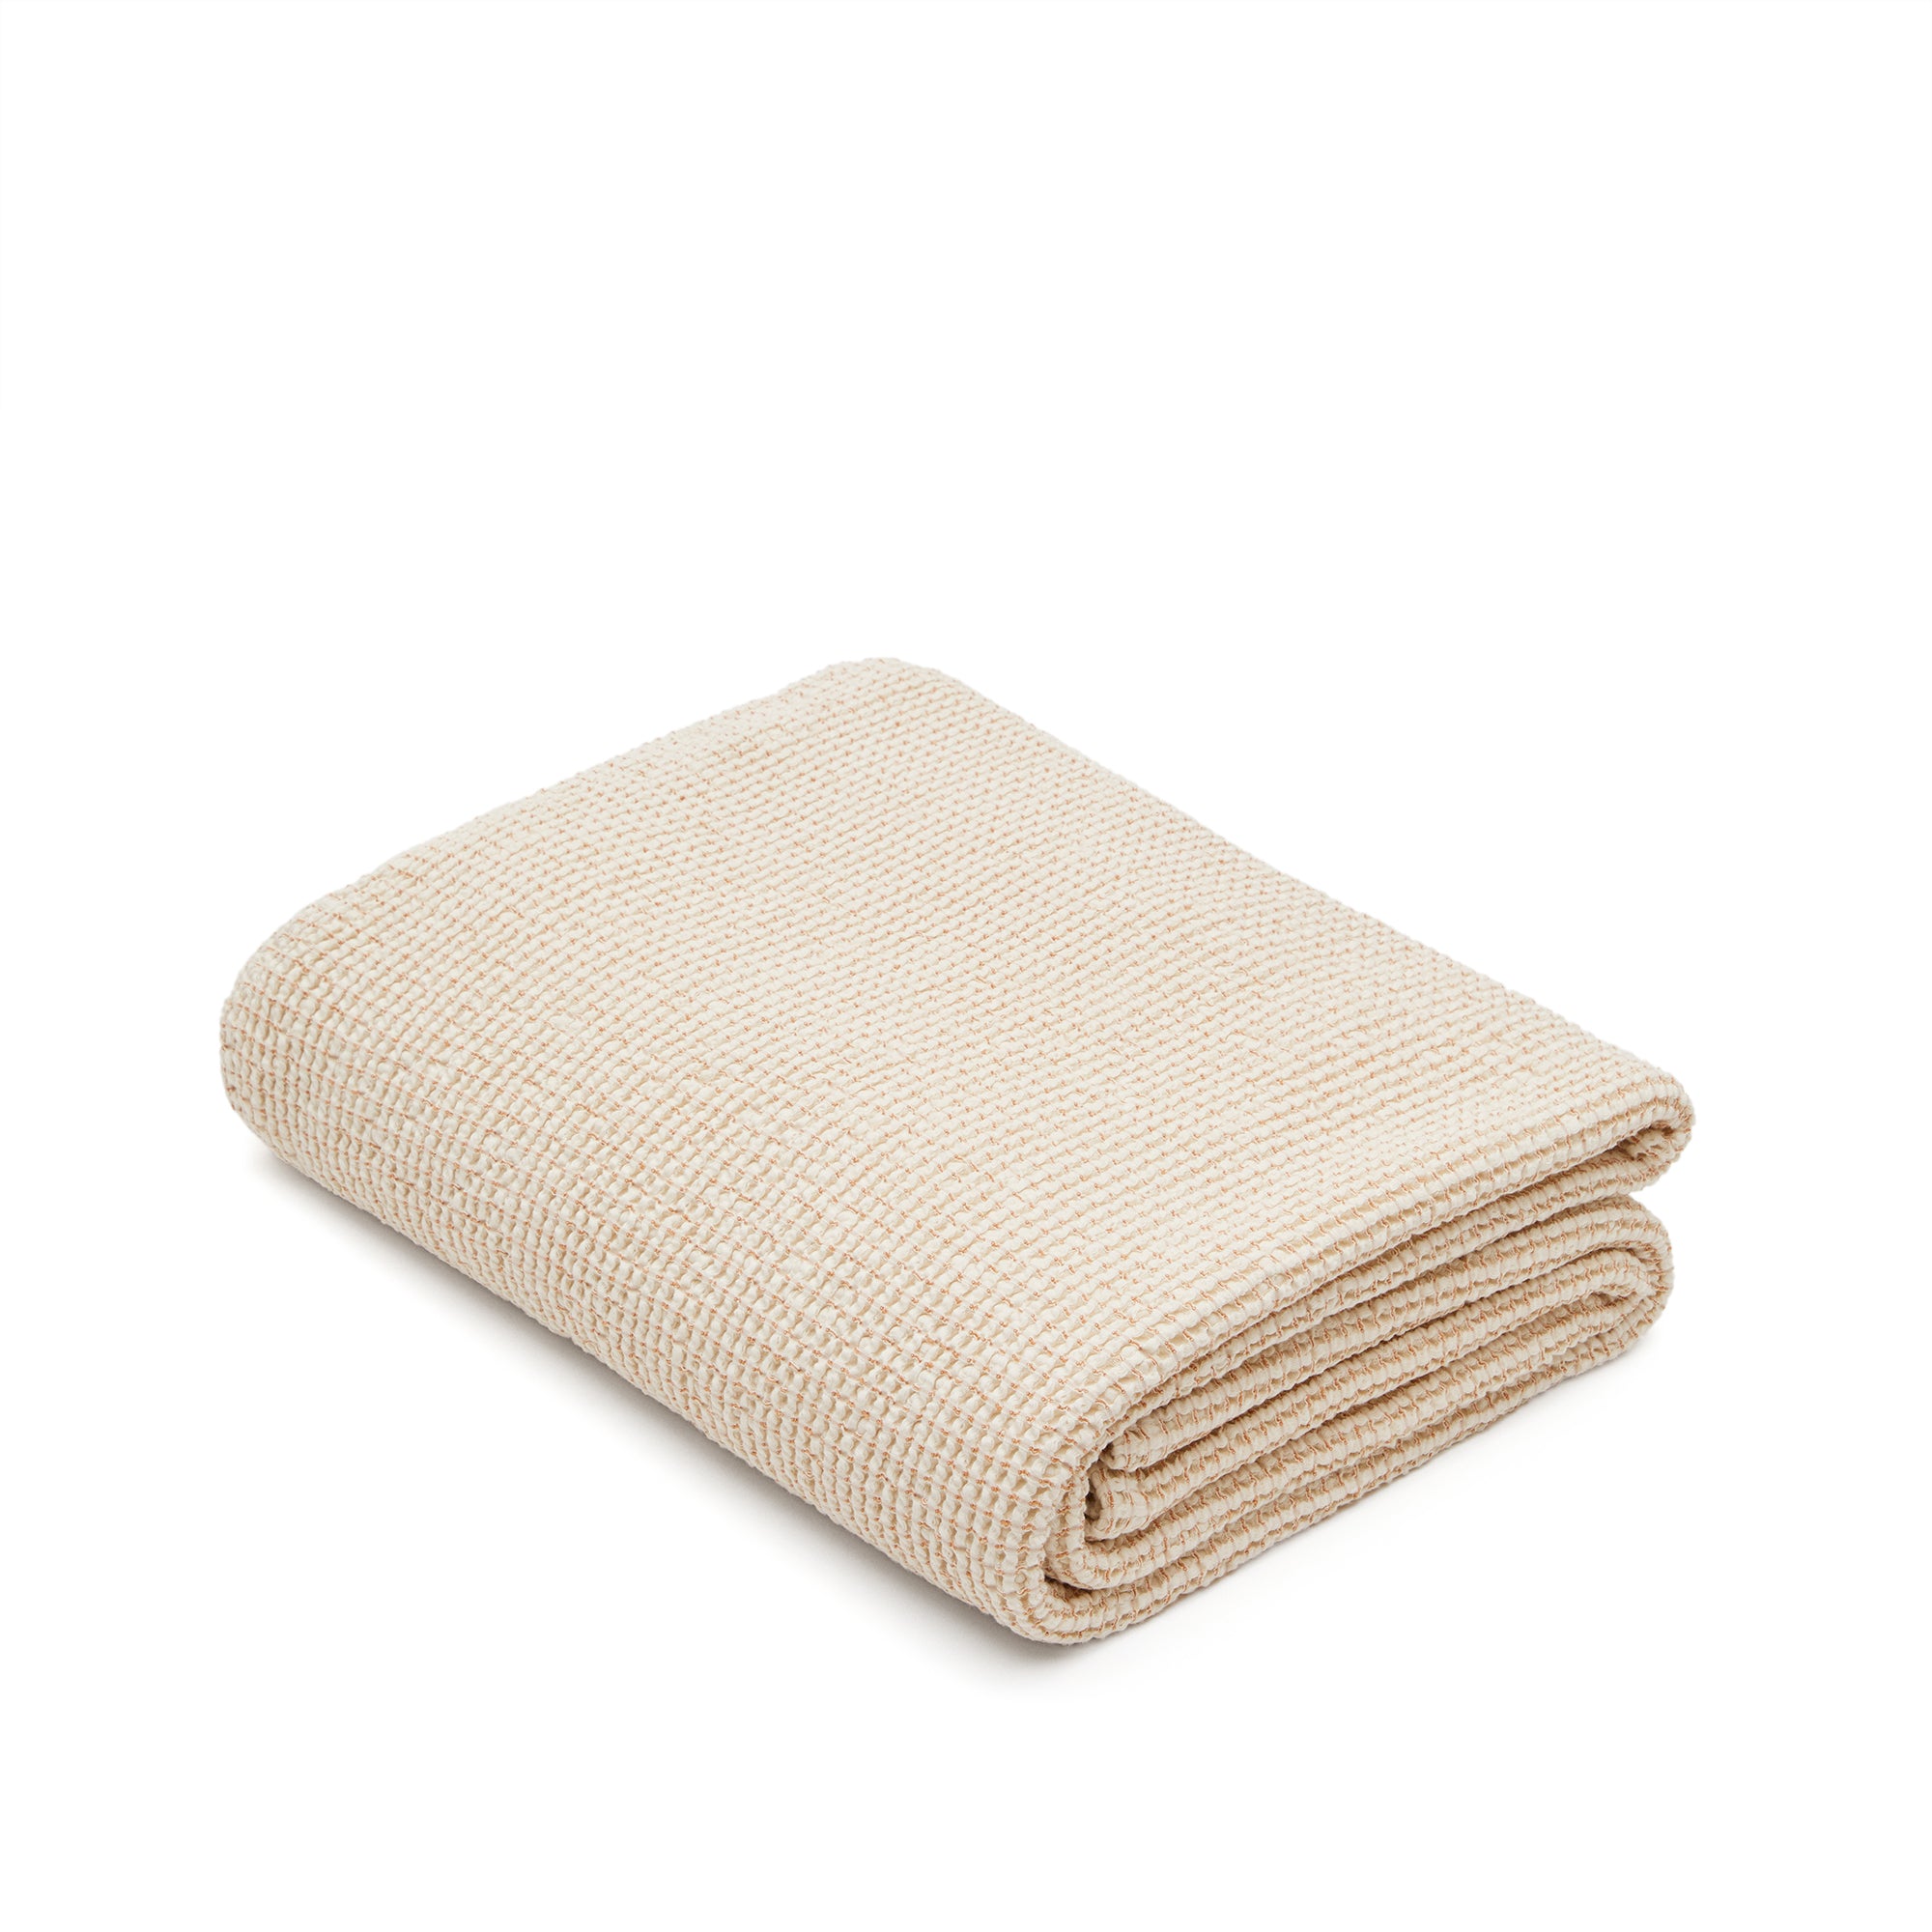 Senara beige cotton bedspread for 90/135 cm bed